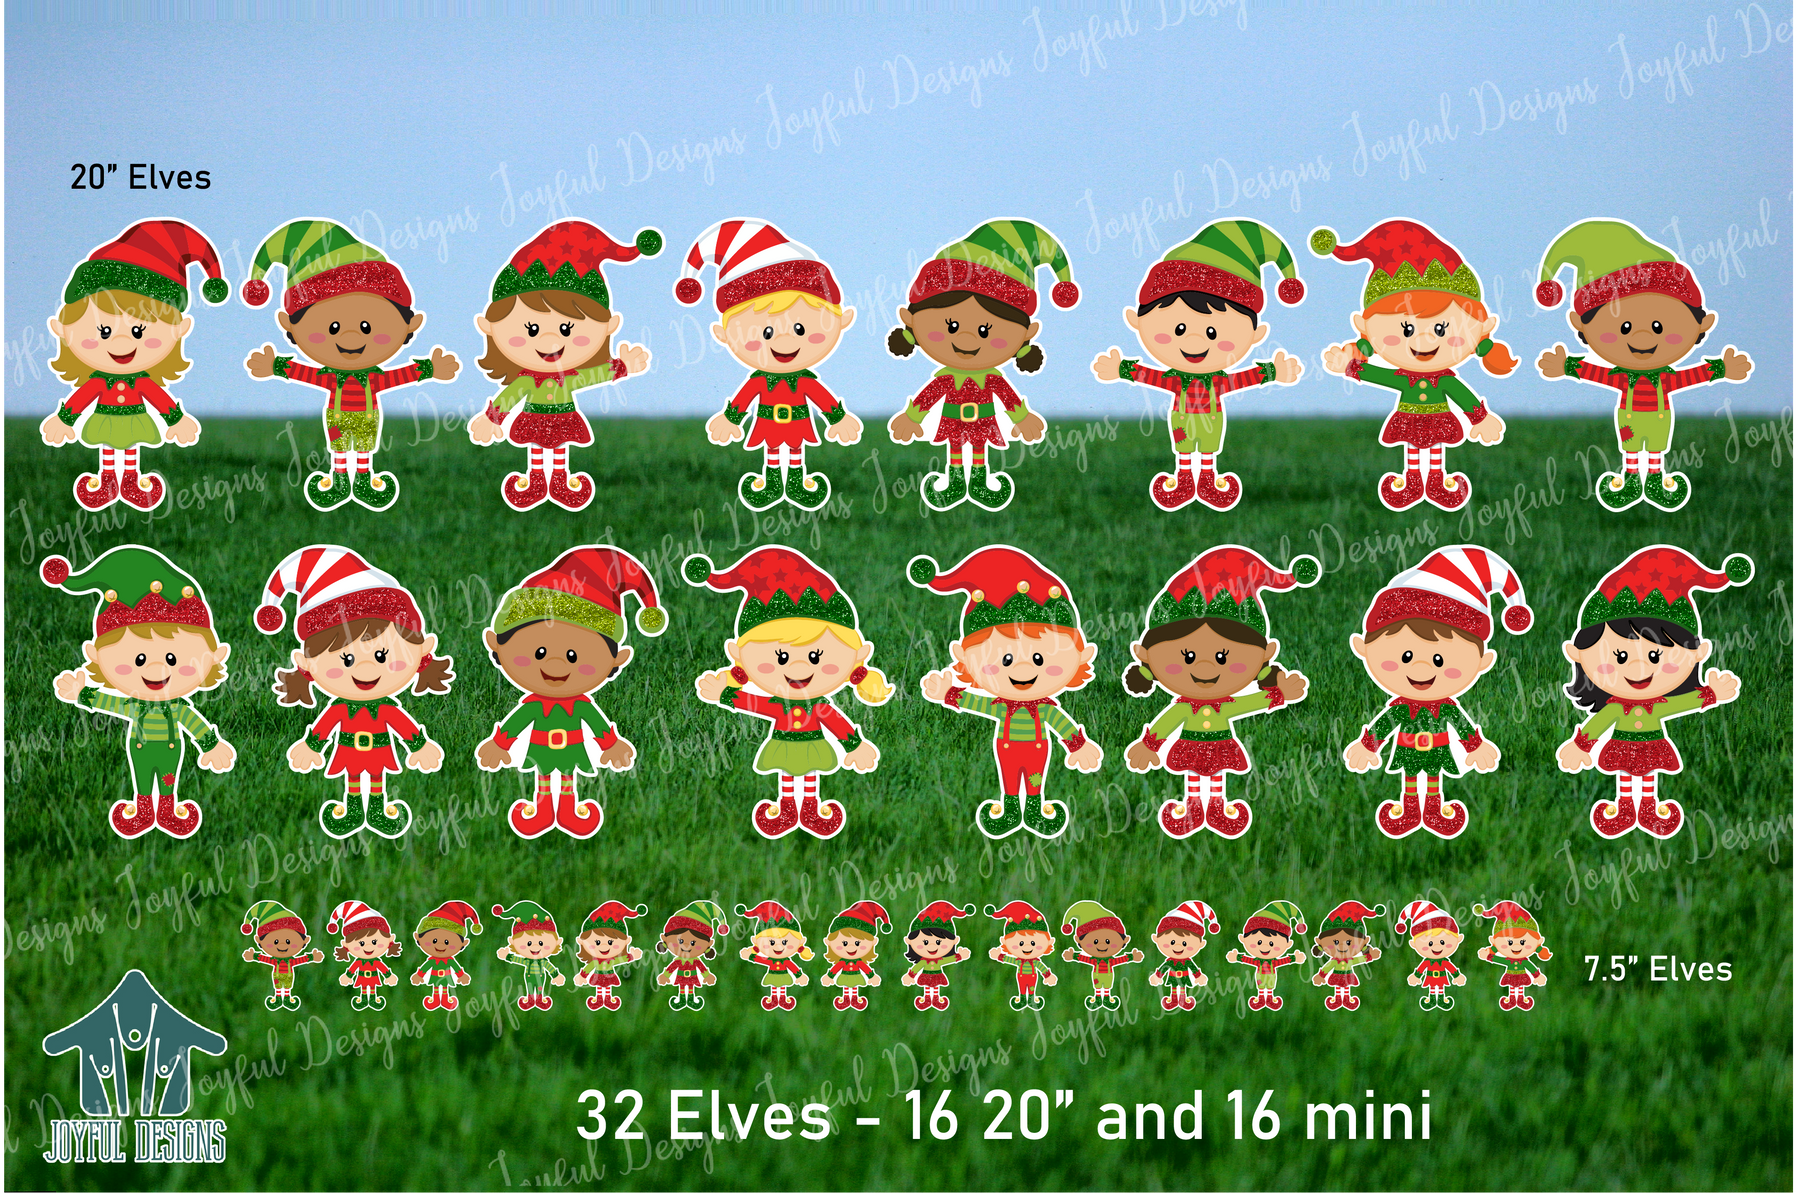 Elves, elves and more elves! Set of 32 Christmas Elves - 16 20" elves and 16 mini elves